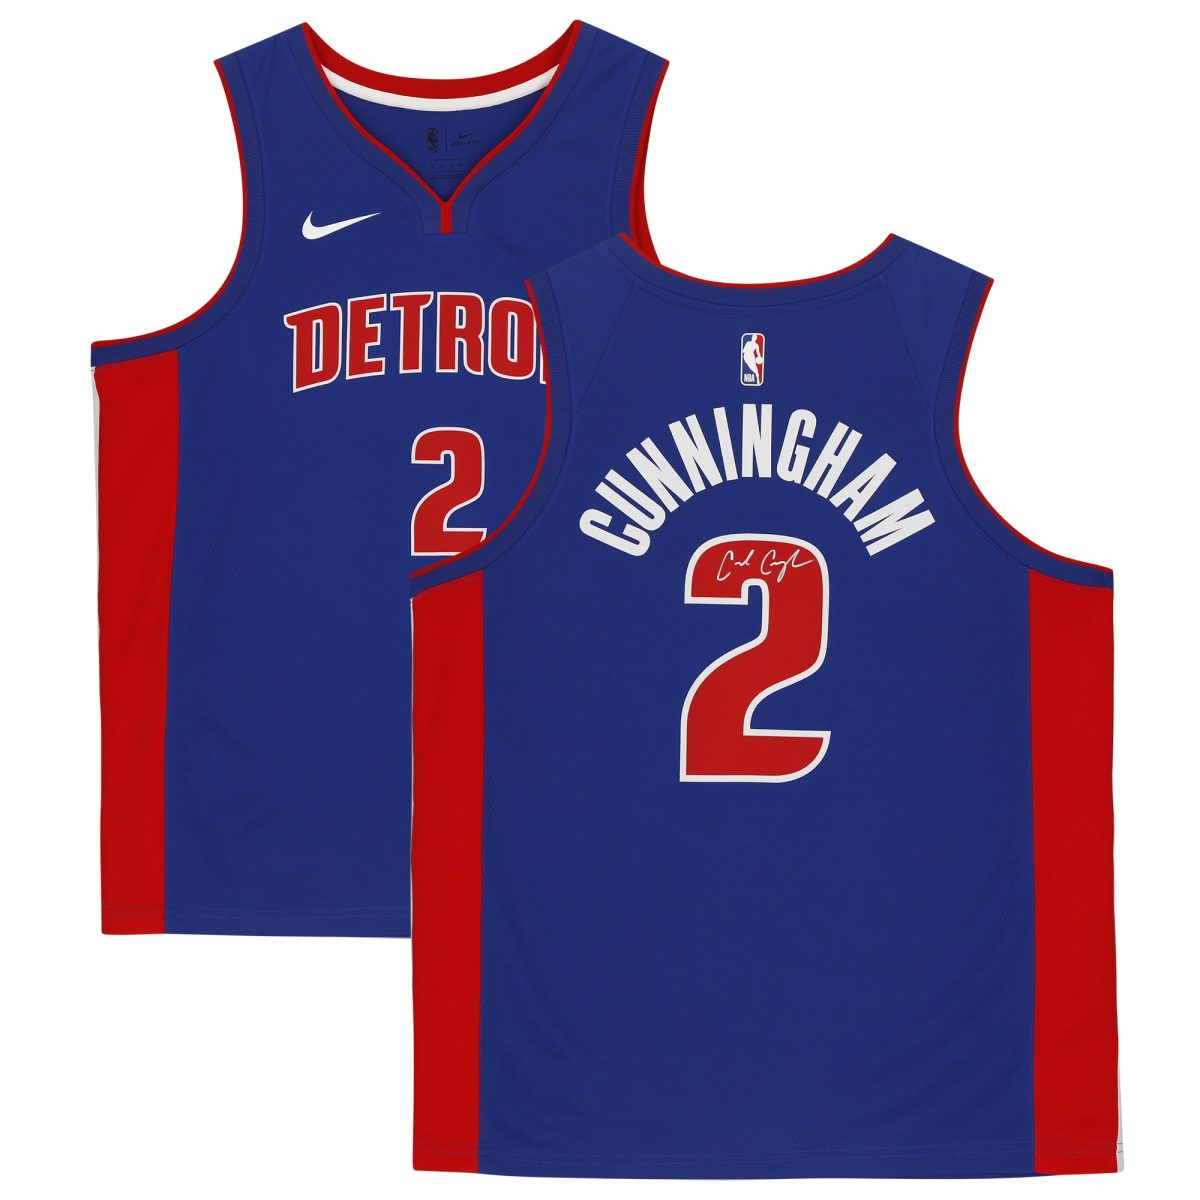 Cade Cunningham Detroit Pistons Autographed Swingman Jersey